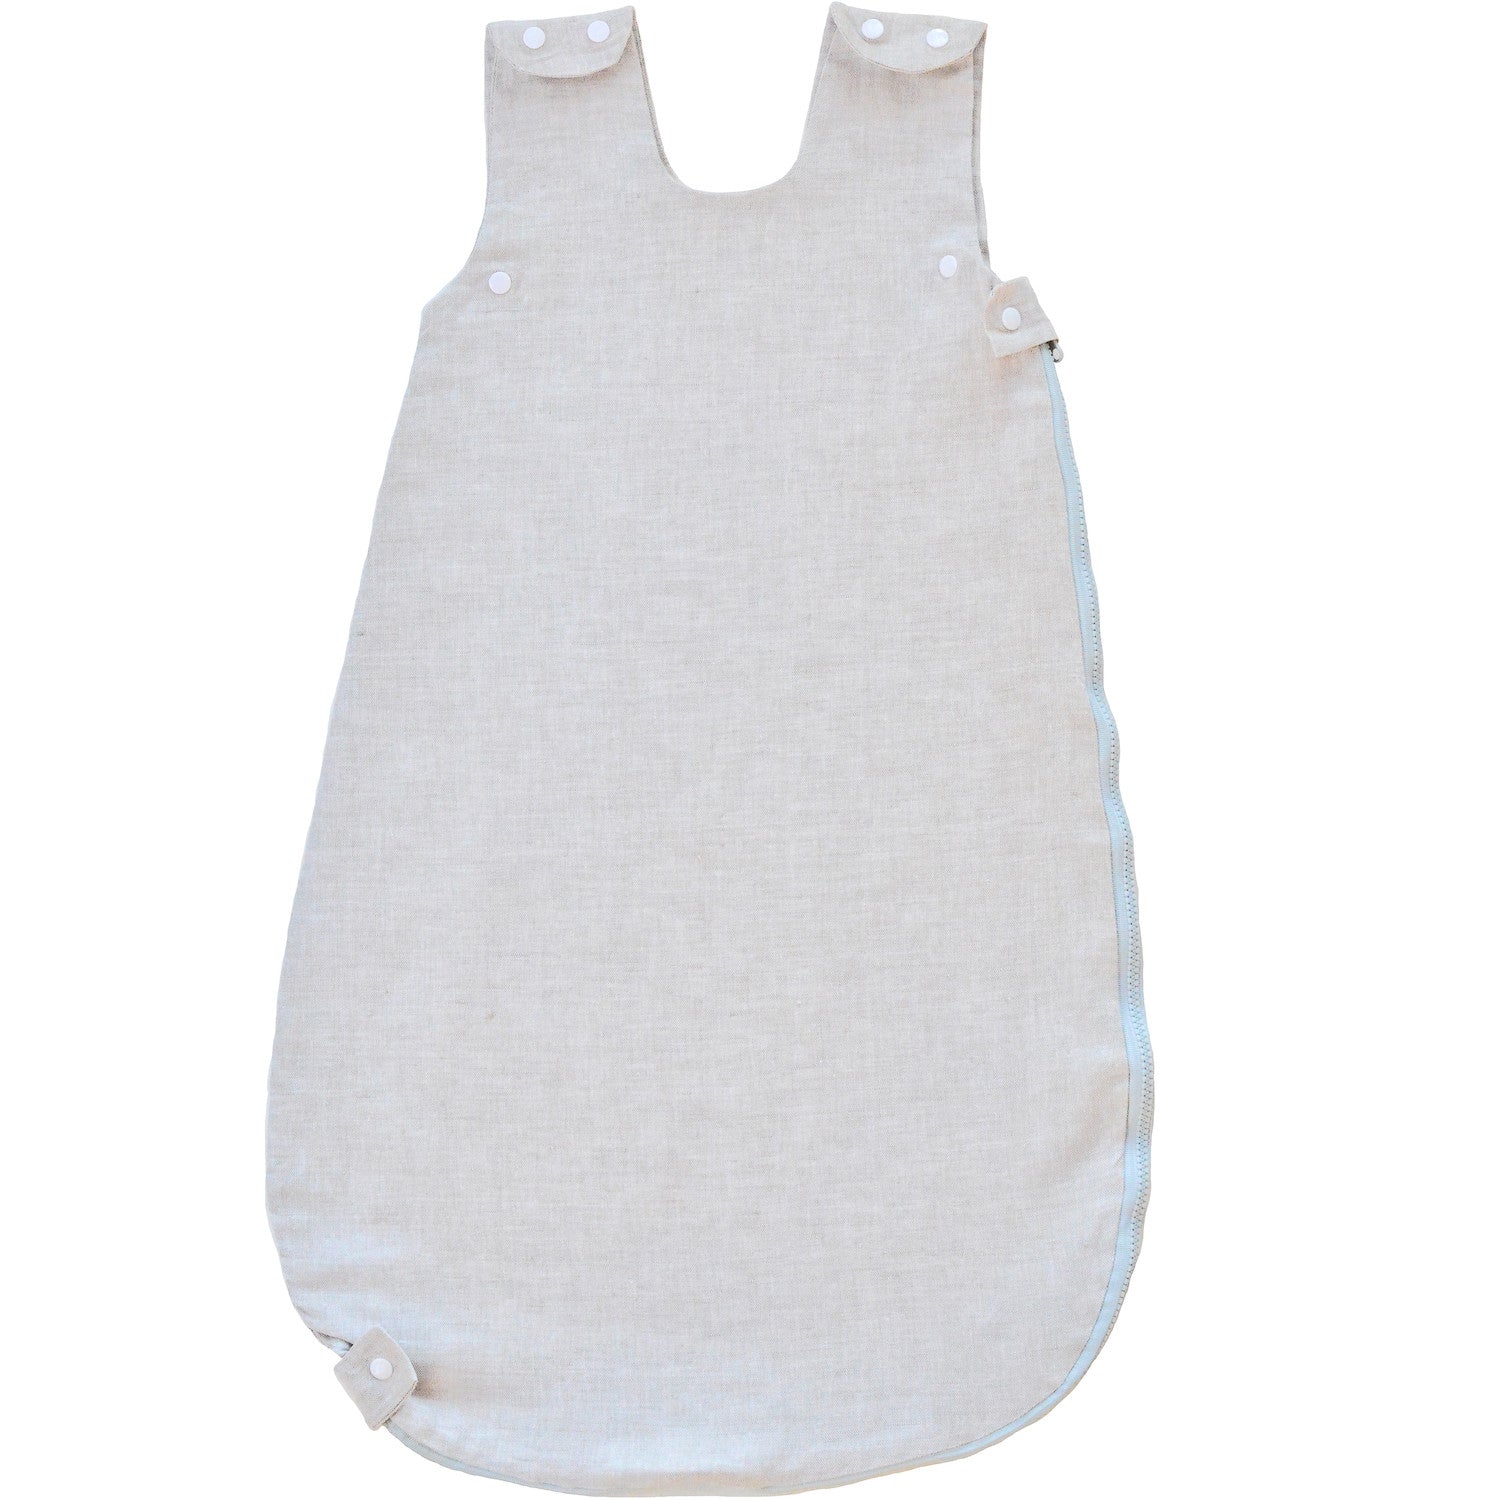 Organic Baby Pucksack Wild Animals, Romper Bag, Sleeping Bag, Baby &  Children, Size 44 to Size 110 Selectable 